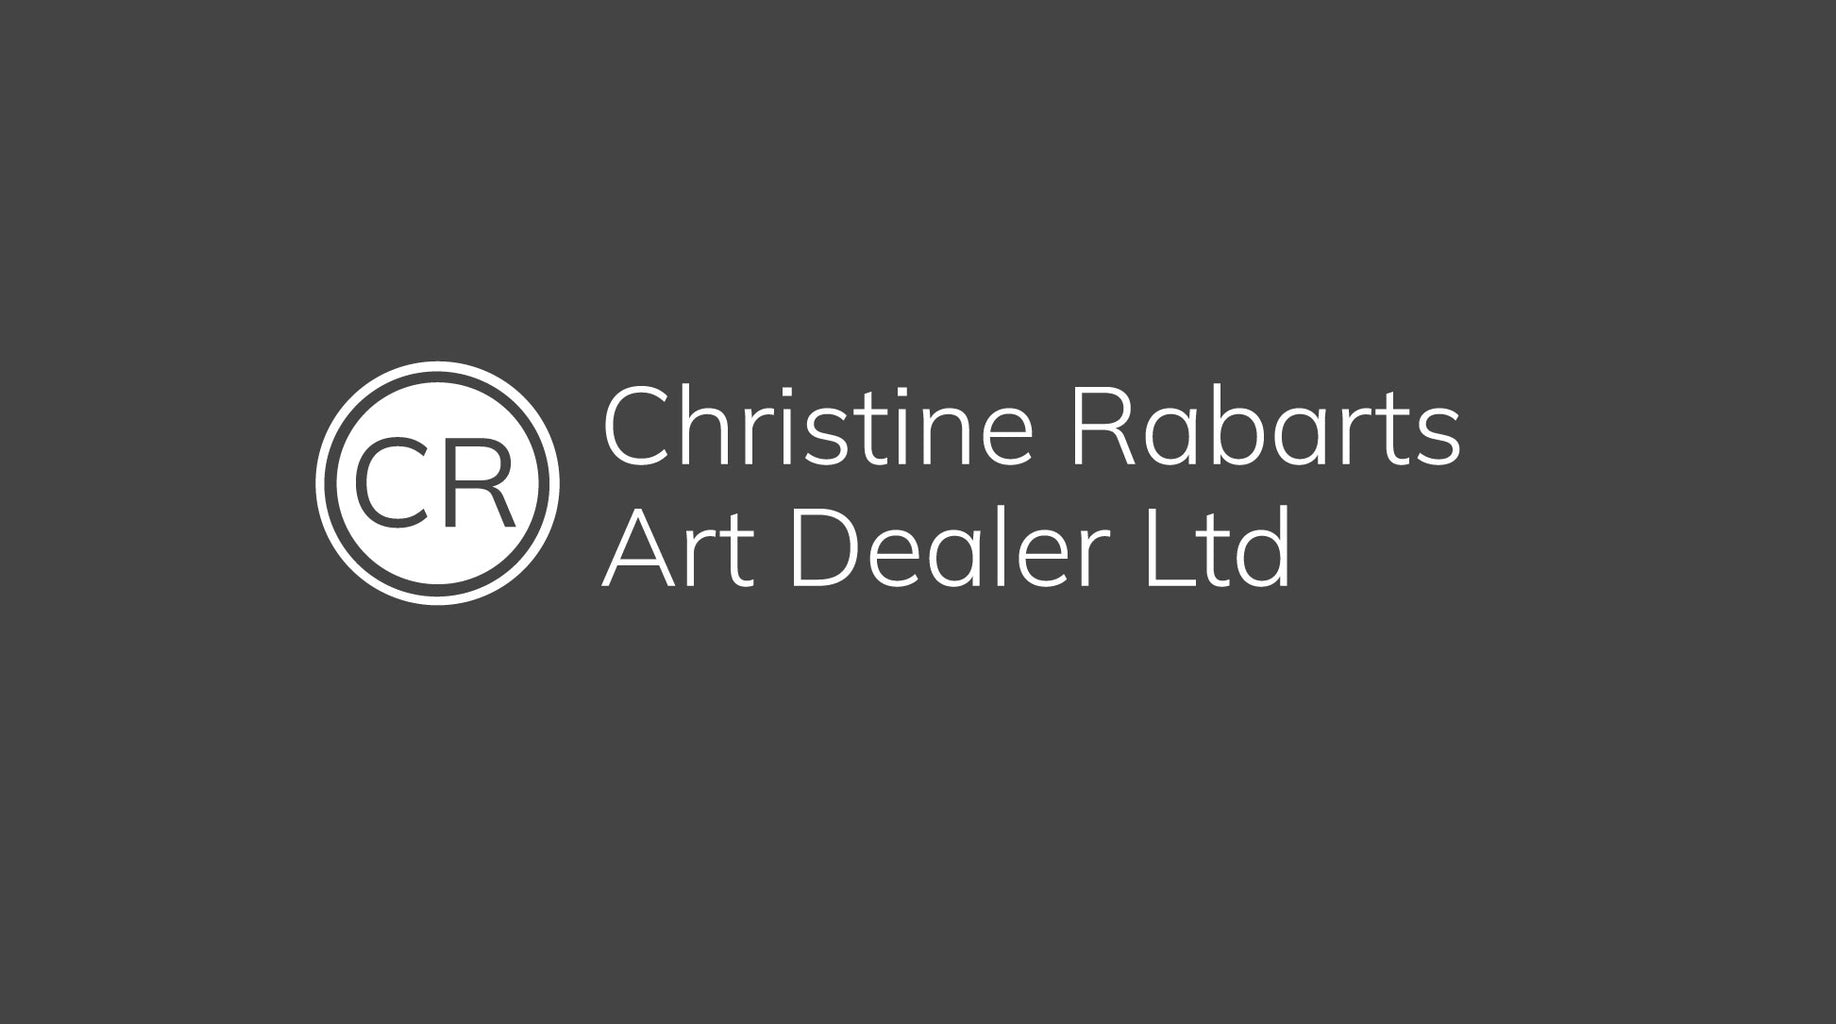 Christine Rabarts Art Dealer Ltd